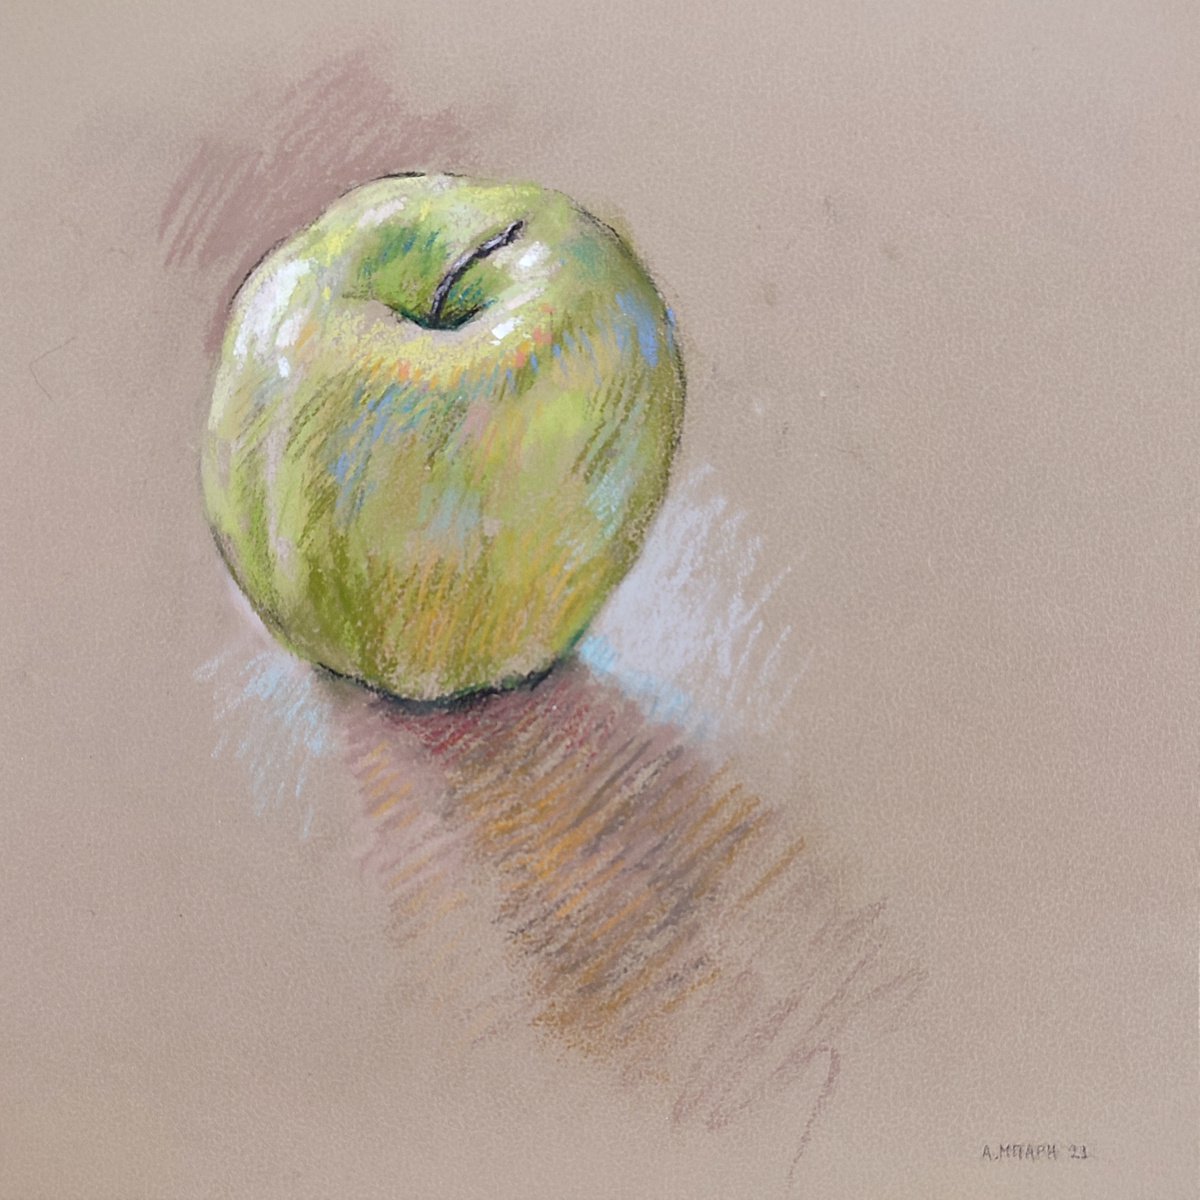 The apple project II by Alexandra Bari